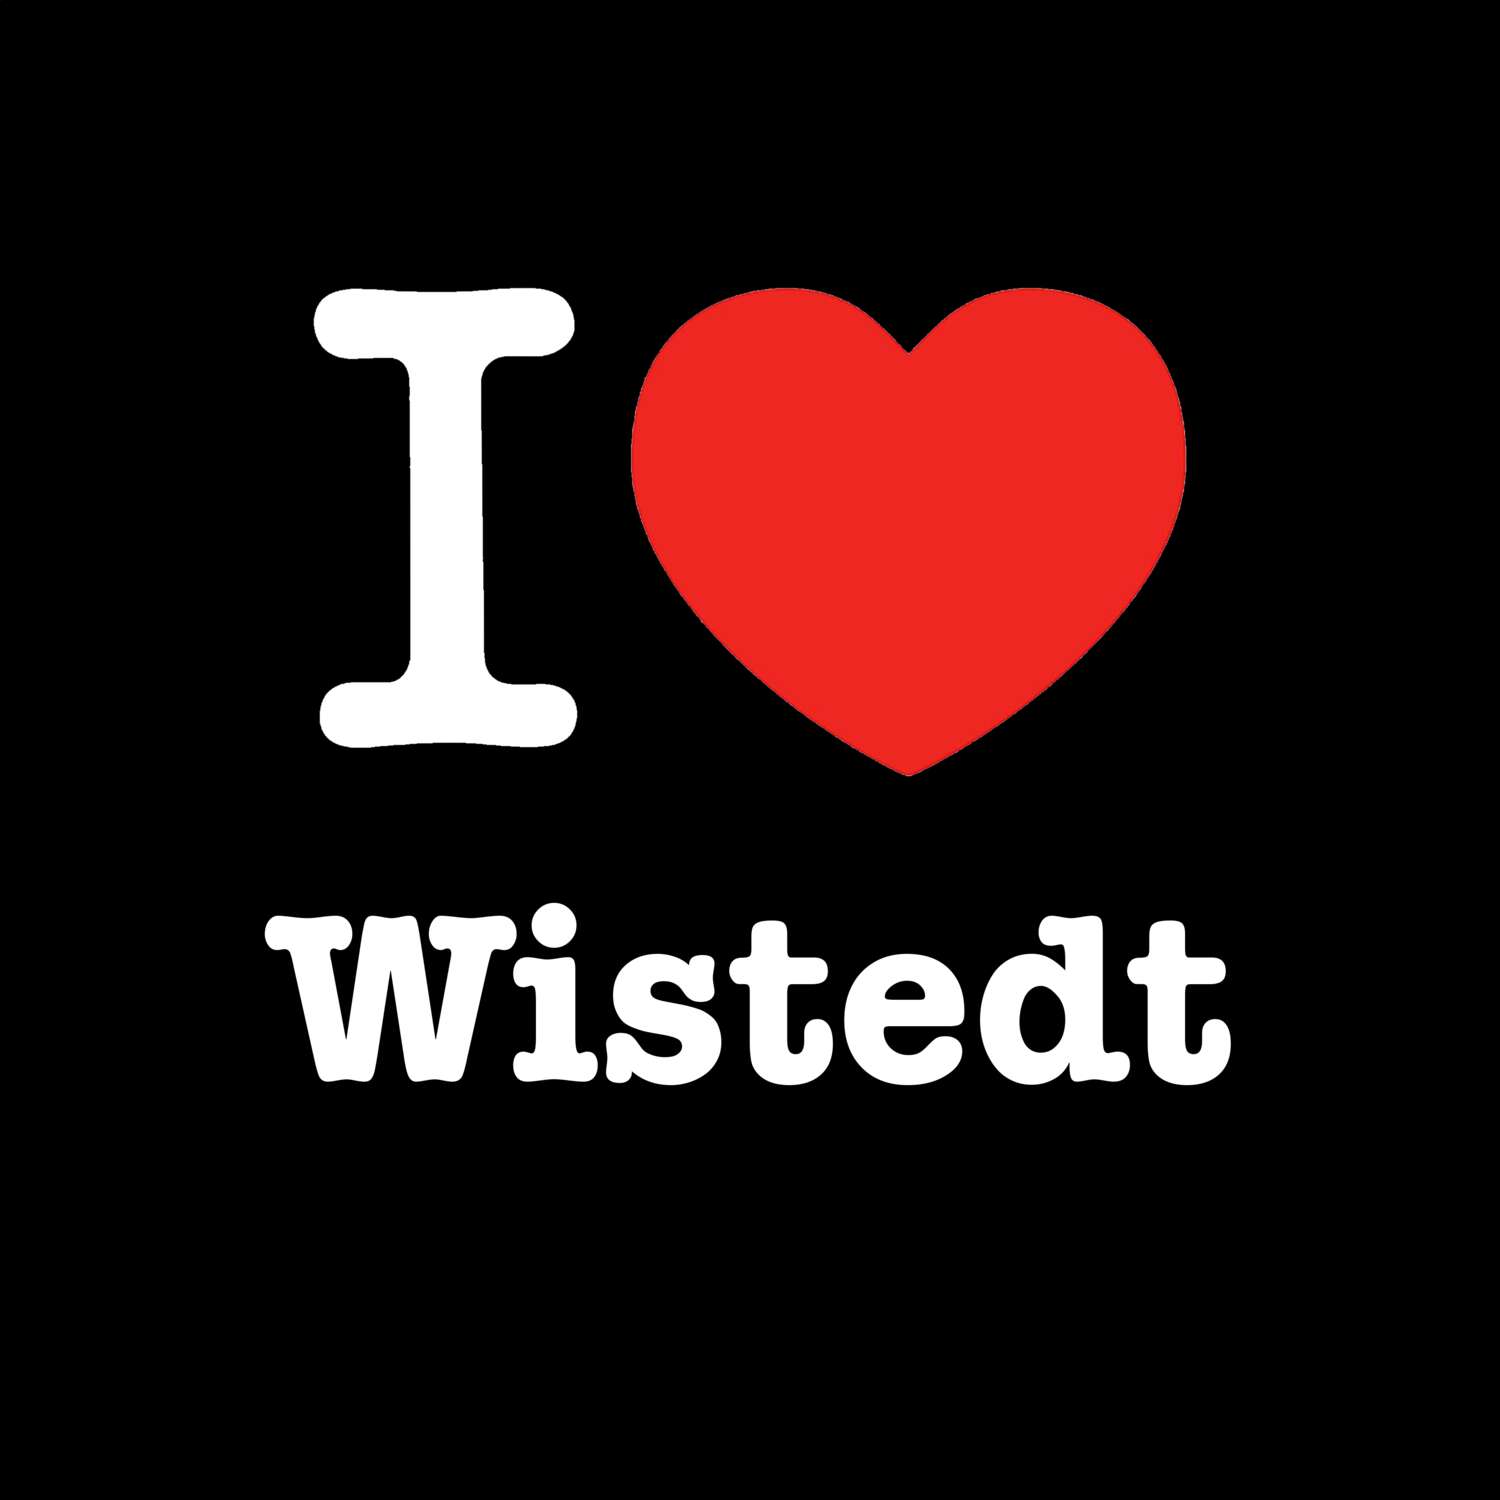 Wistedt T-Shirt »I love«